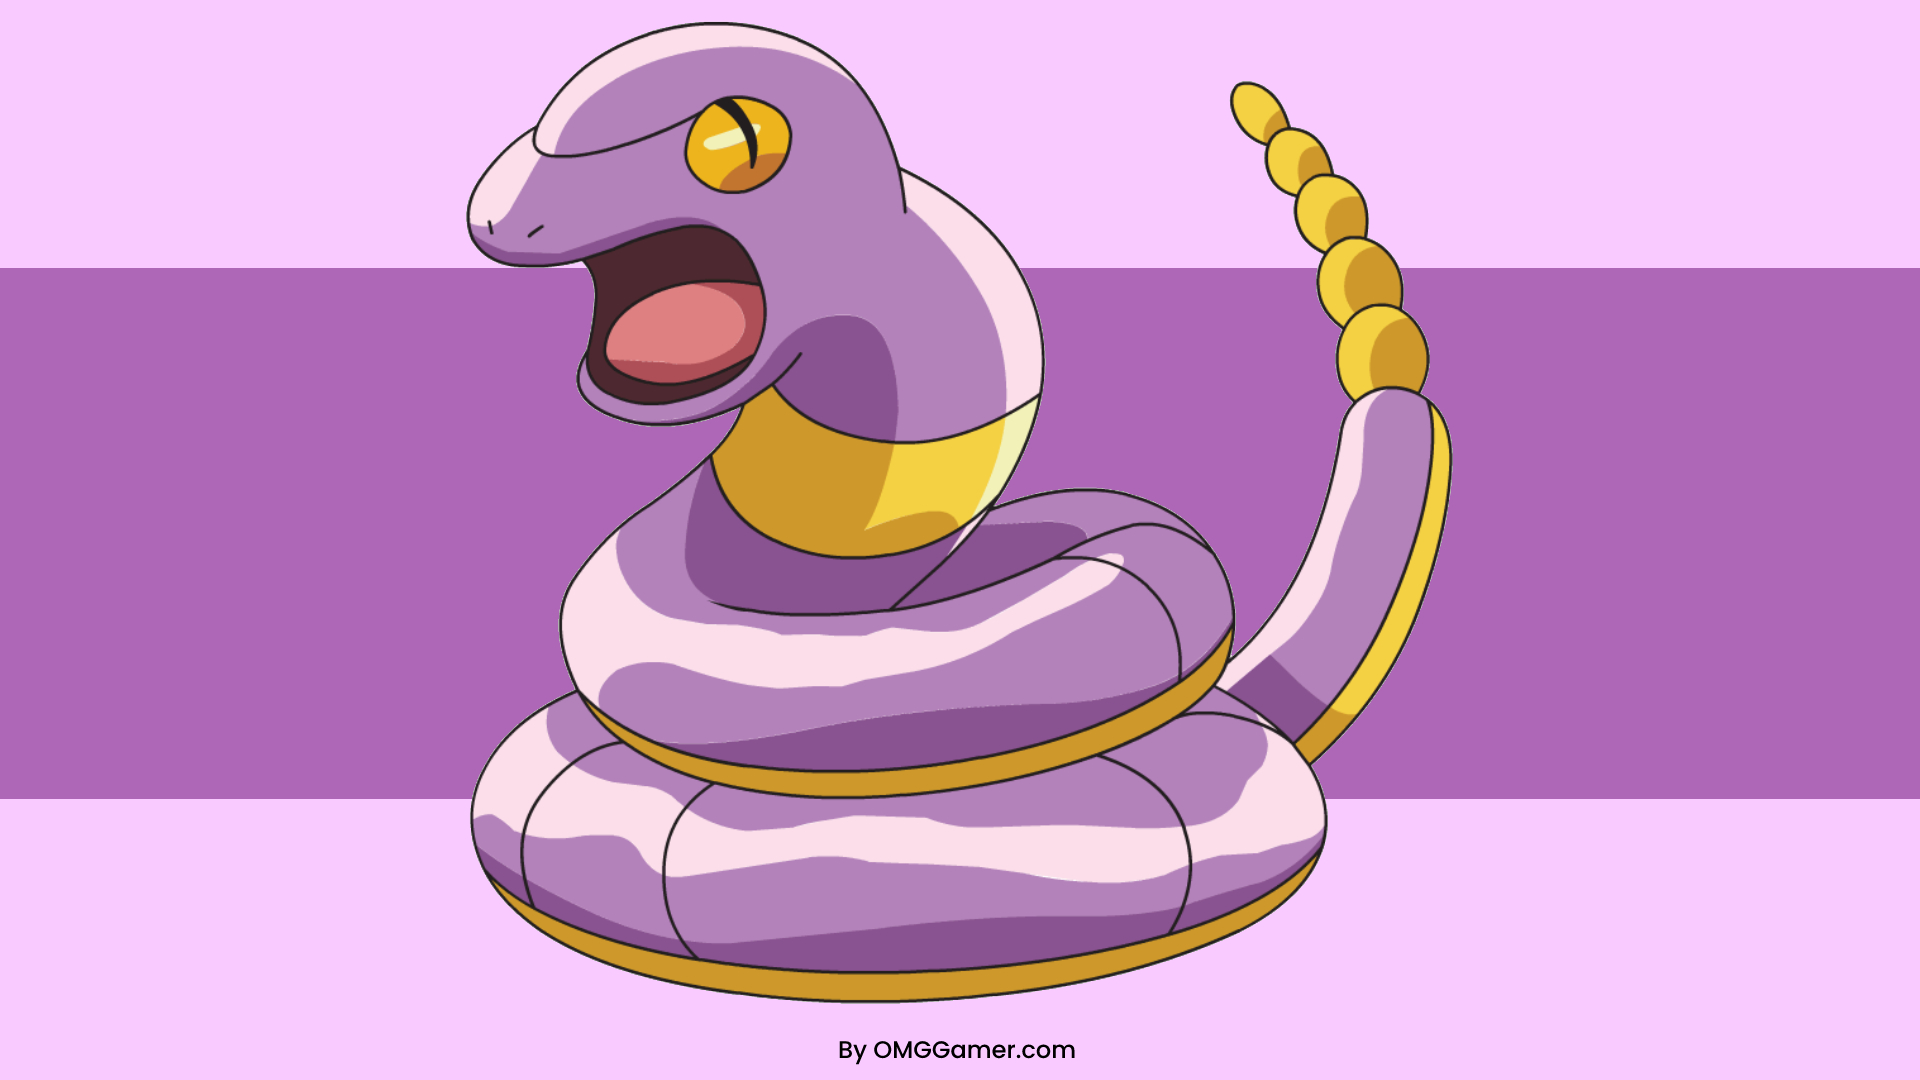 Ekans snake pokemon